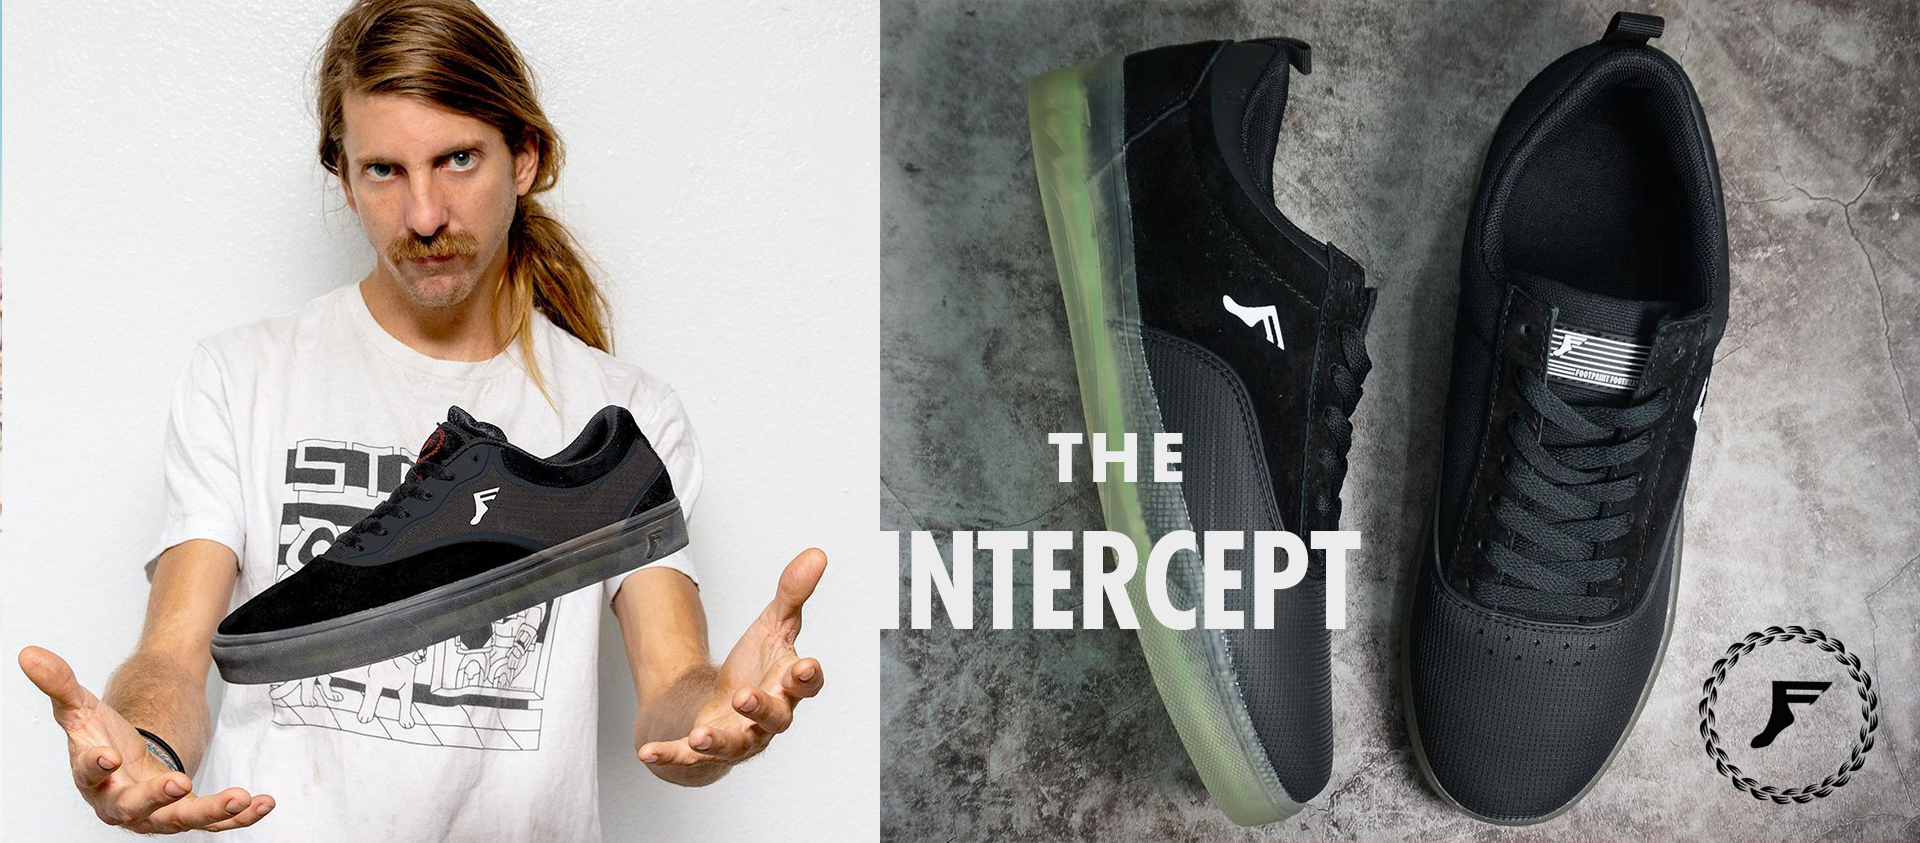 Footprint Footwear - The Intercept